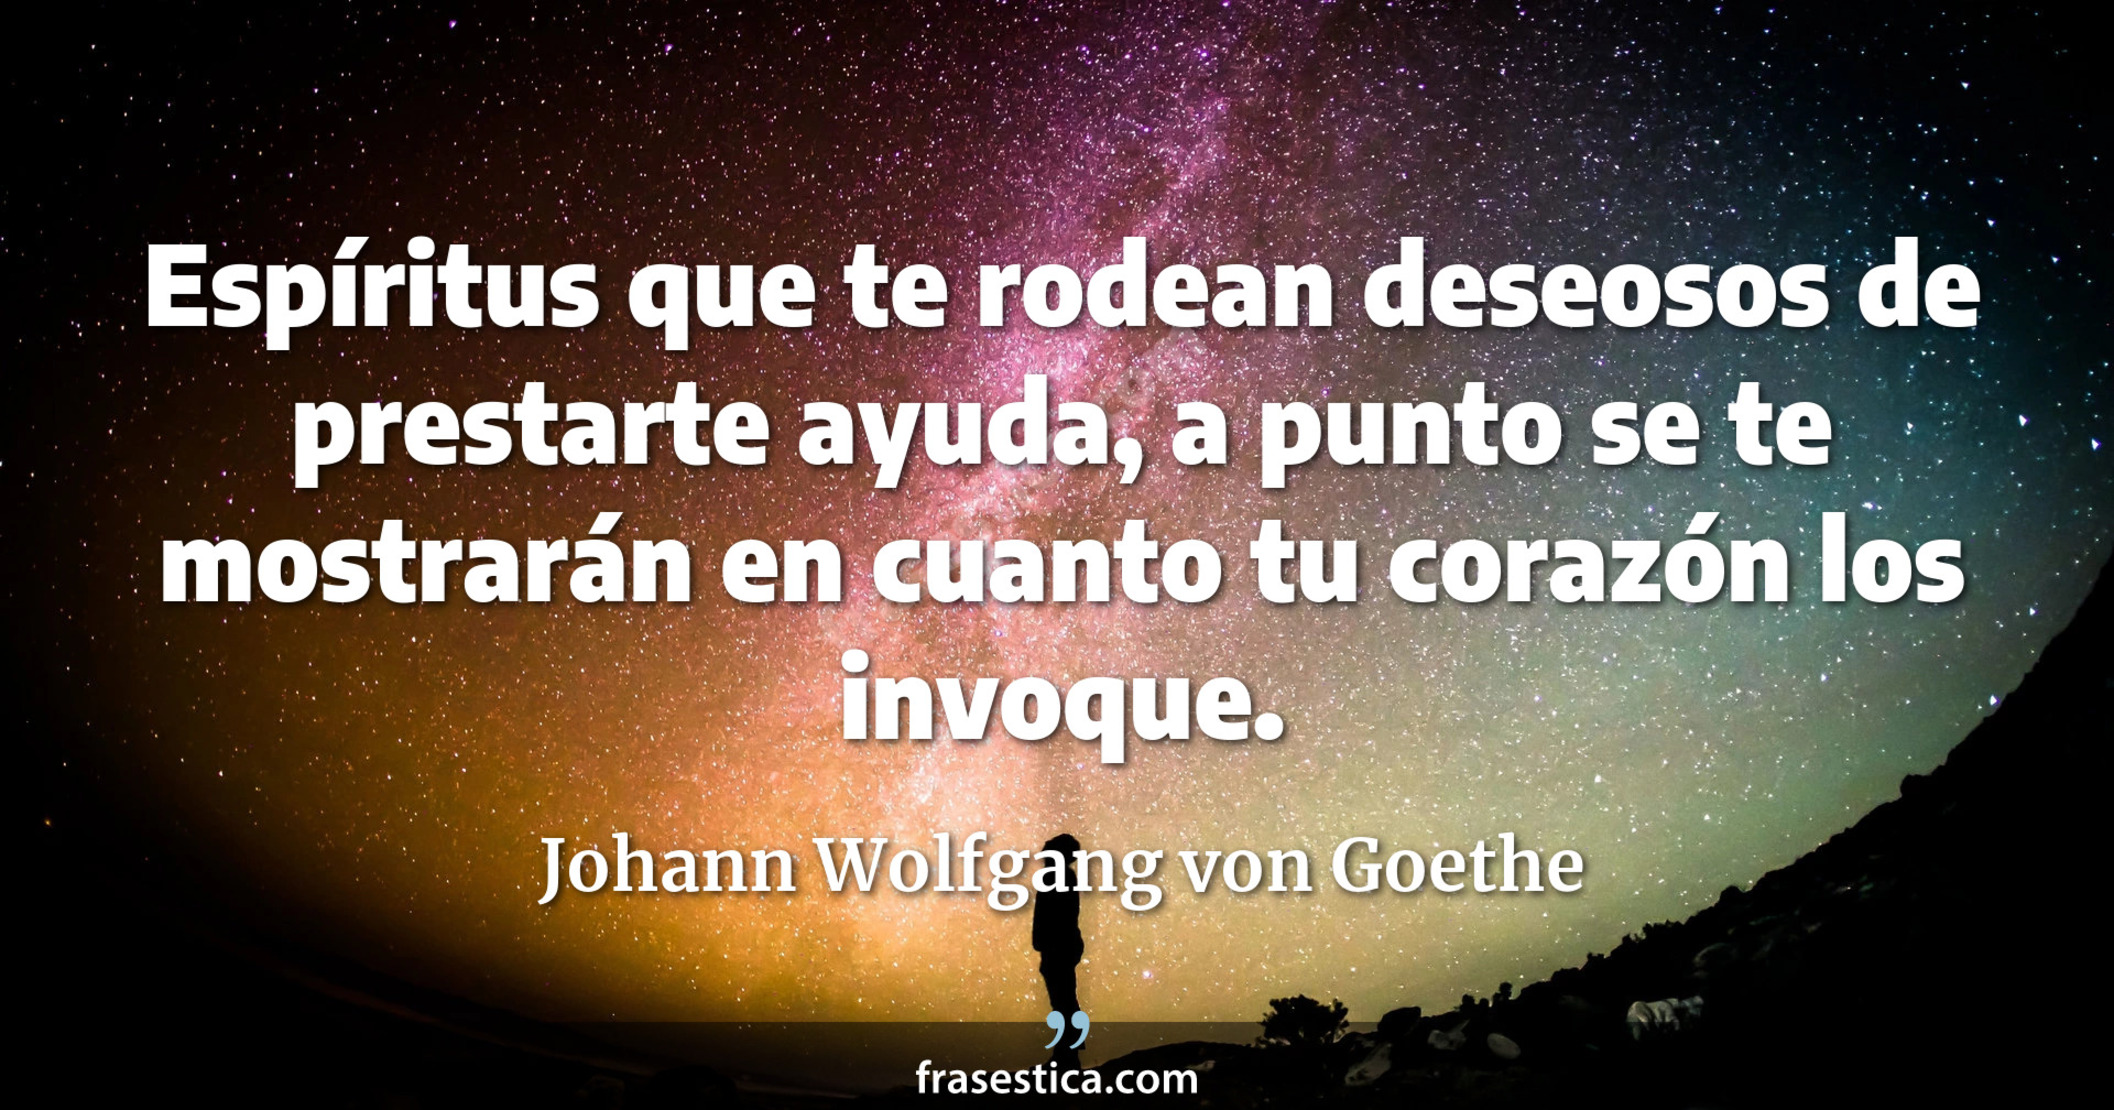 Espíritus que te rodean deseosos de prestarte ayuda, a punto se te mostrarán en cuanto tu corazón los invoque. - Johann Wolfgang von Goethe